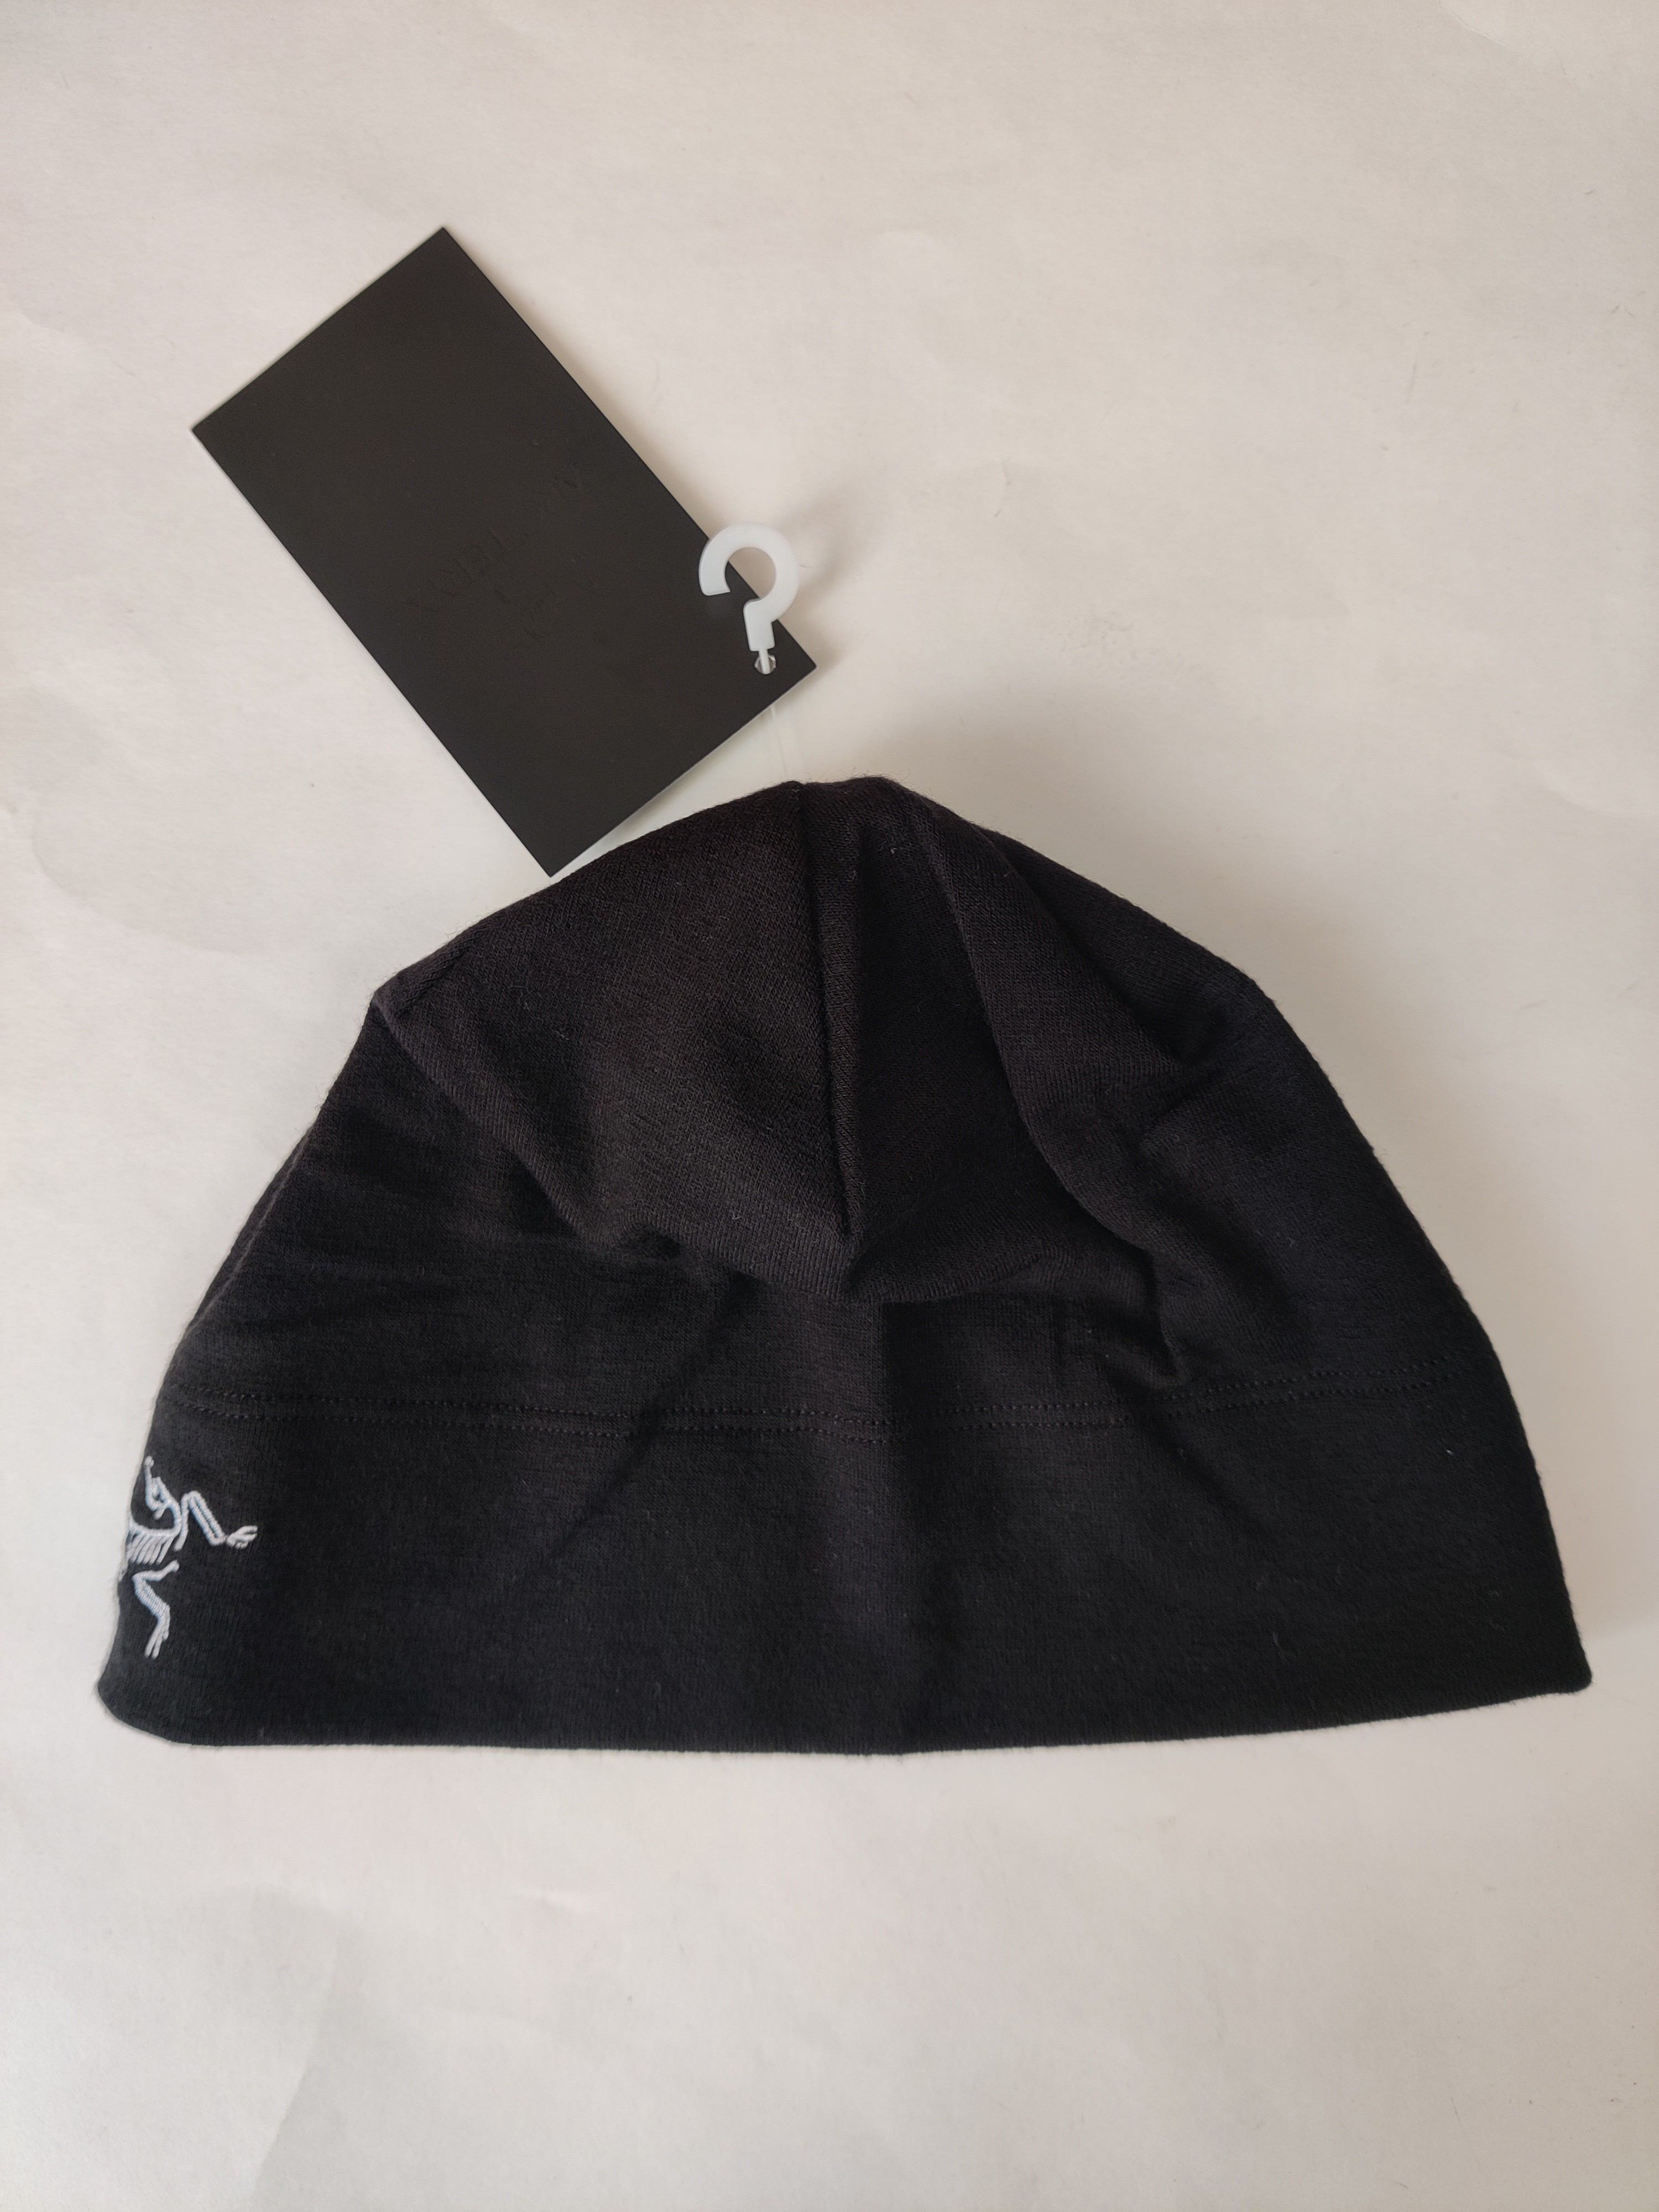 Rho LTW Merino Wool Beanie Thin Hat Winter Black Travel Outdoor Cap - 3